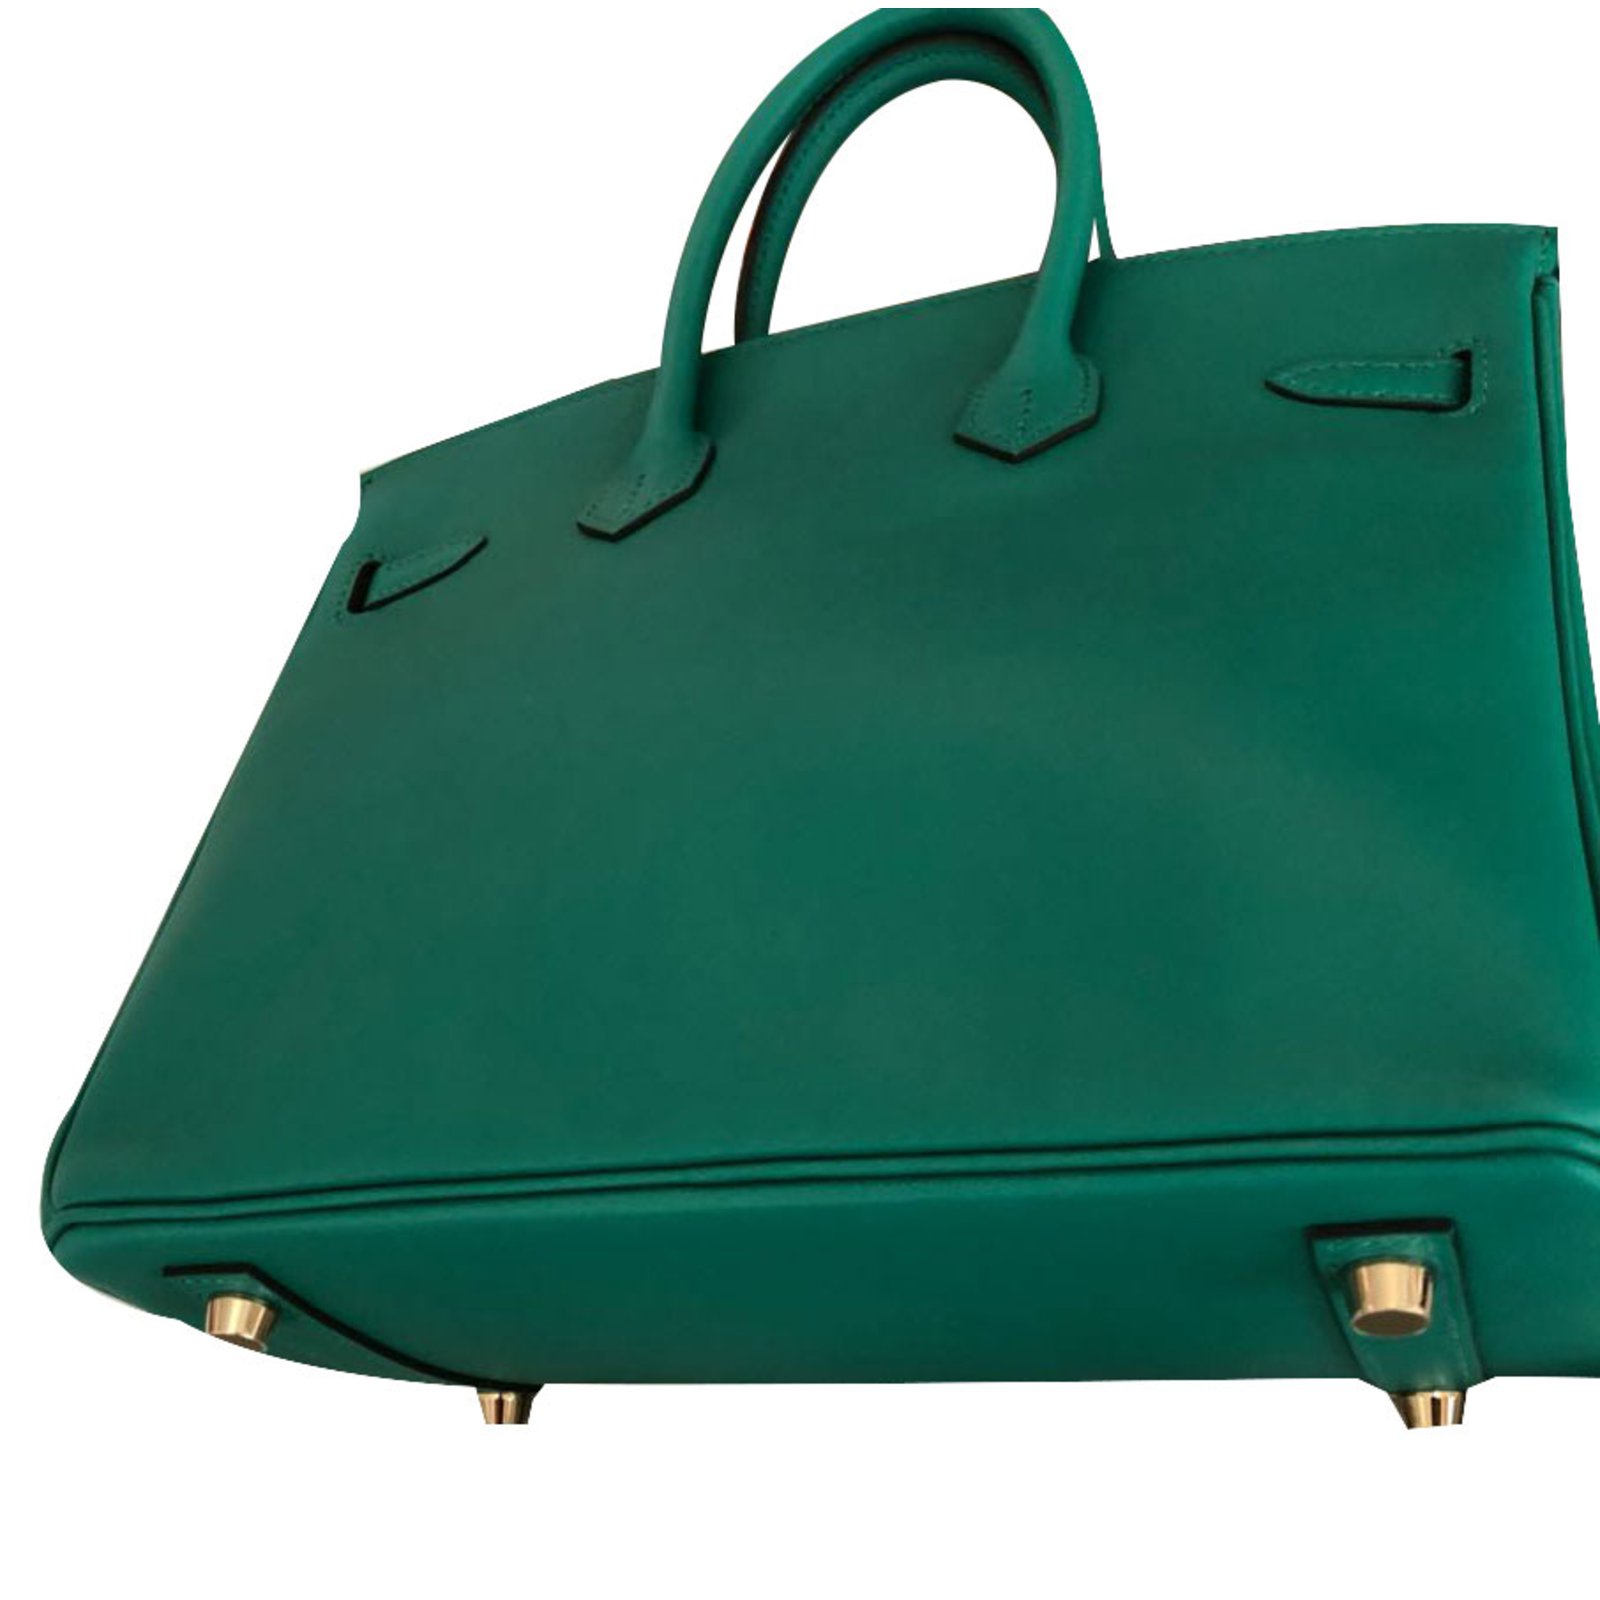 Hermès - Authenticated Birkin 25 Handbag - Leather Green Plain for Women, Never Worn